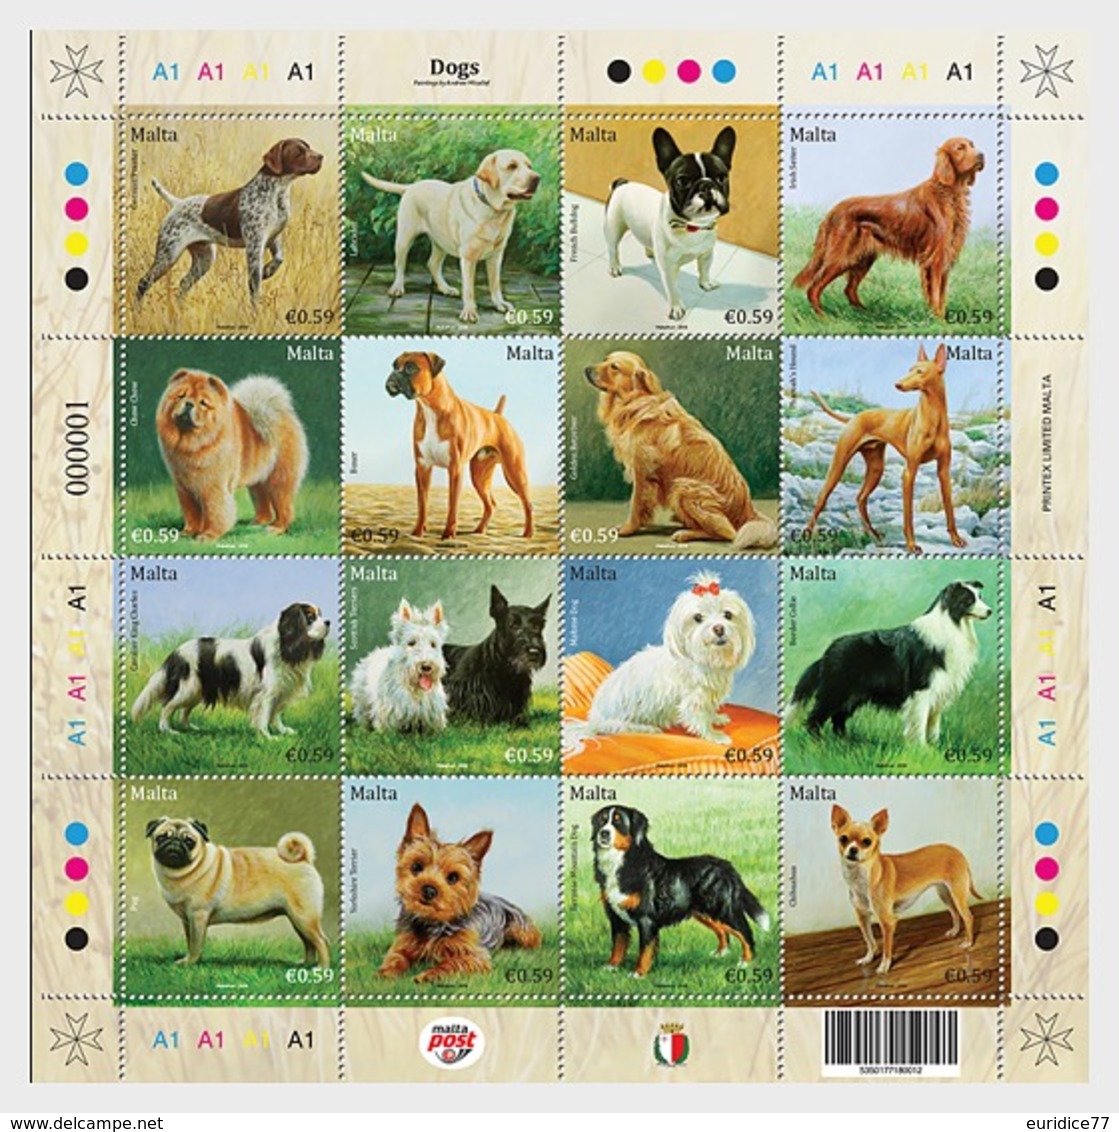 Malta 2018 - Dogs - Miniature Sheet Mnh - Malta